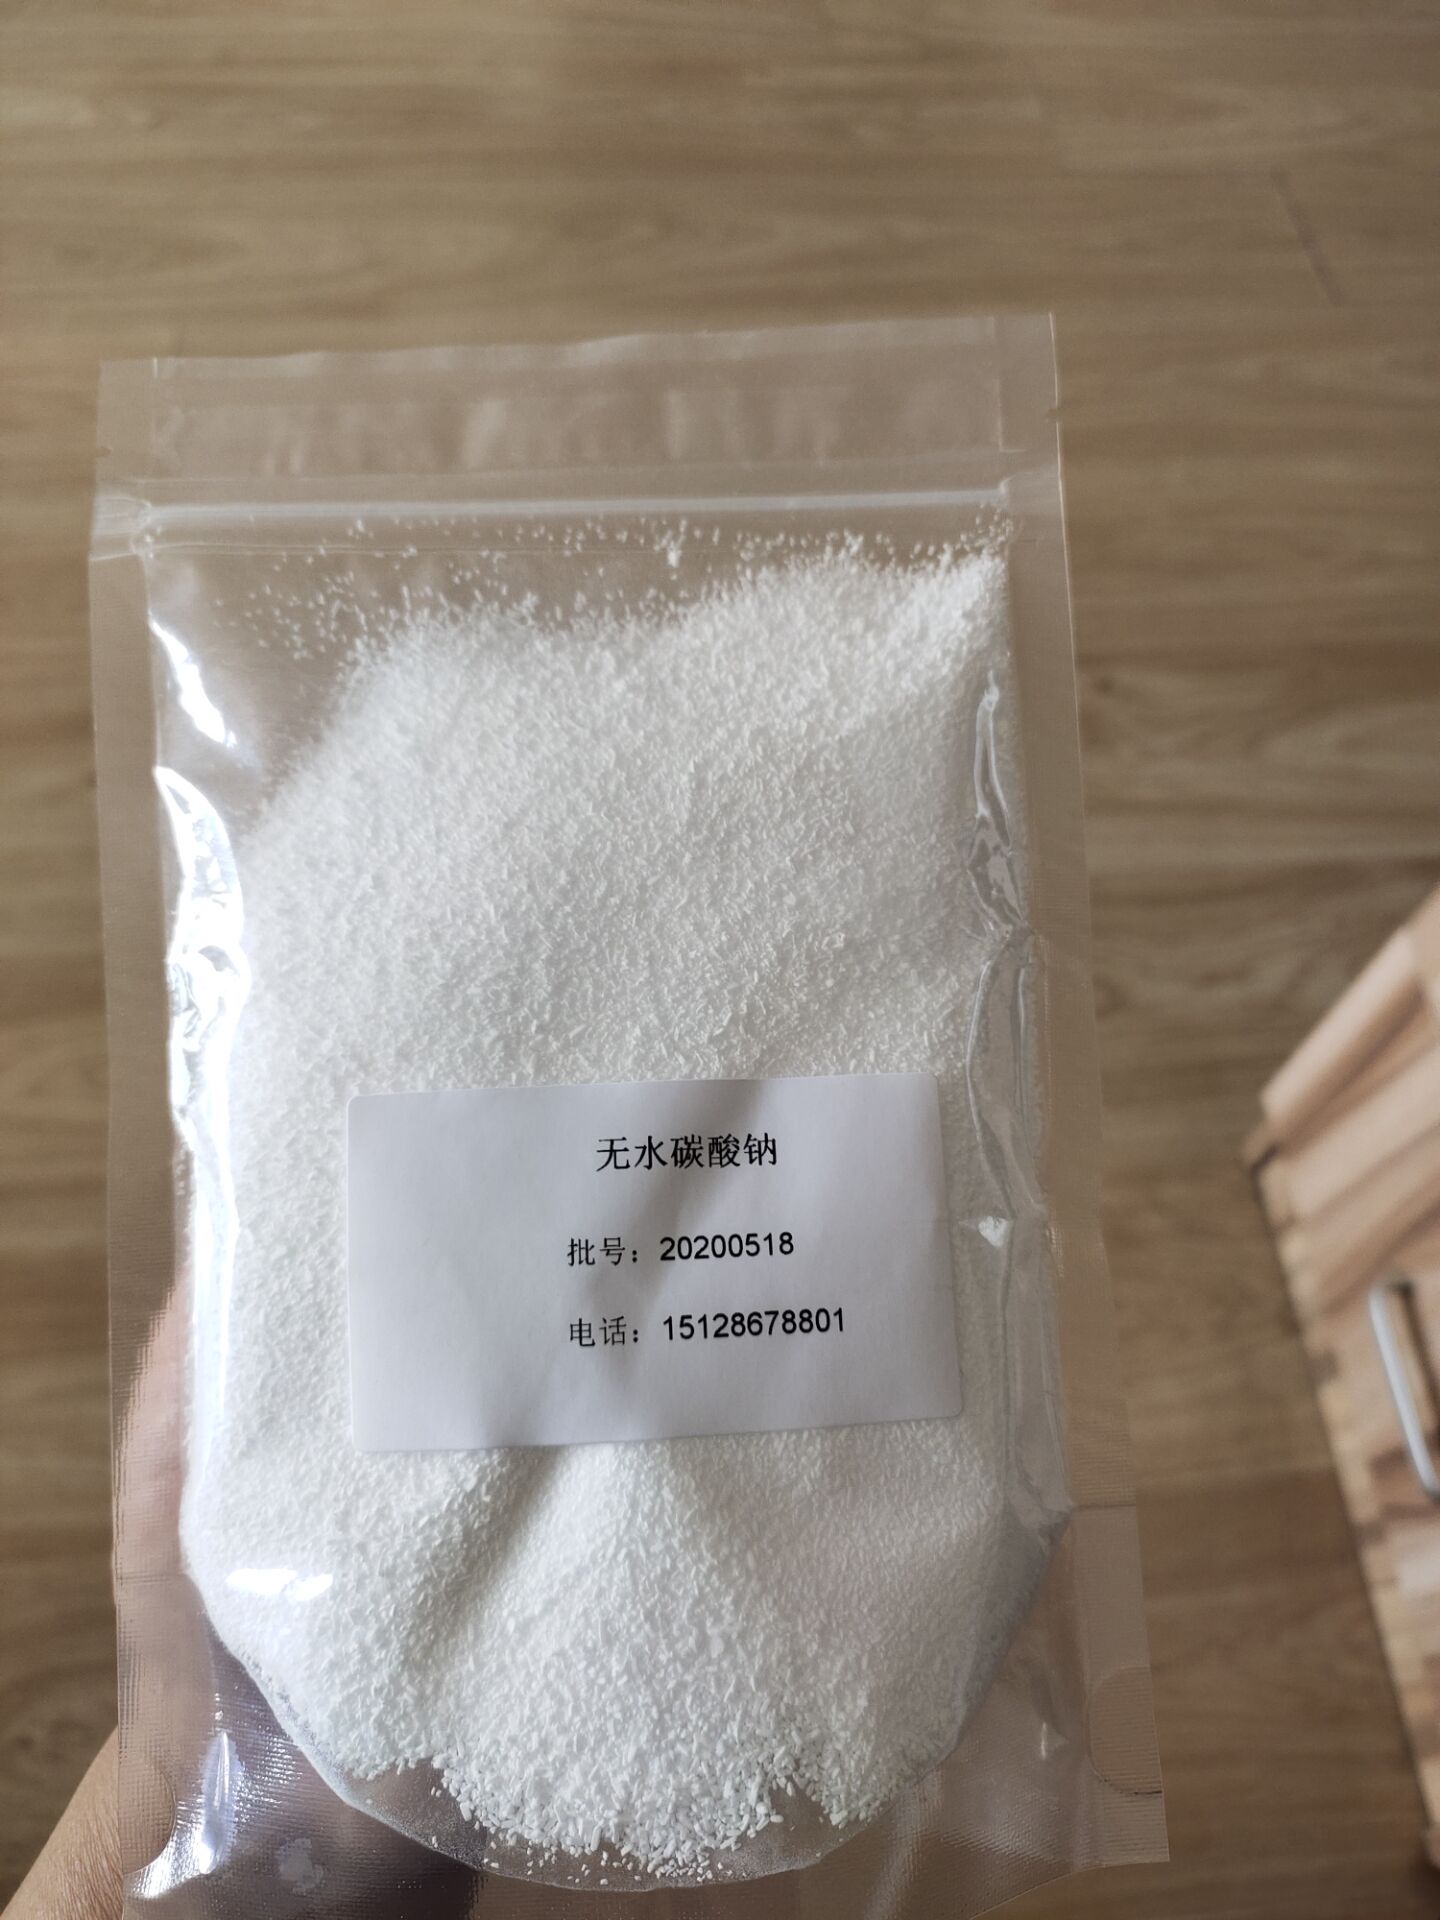 十水碳酸钠,Decahydrate sodium carbonate